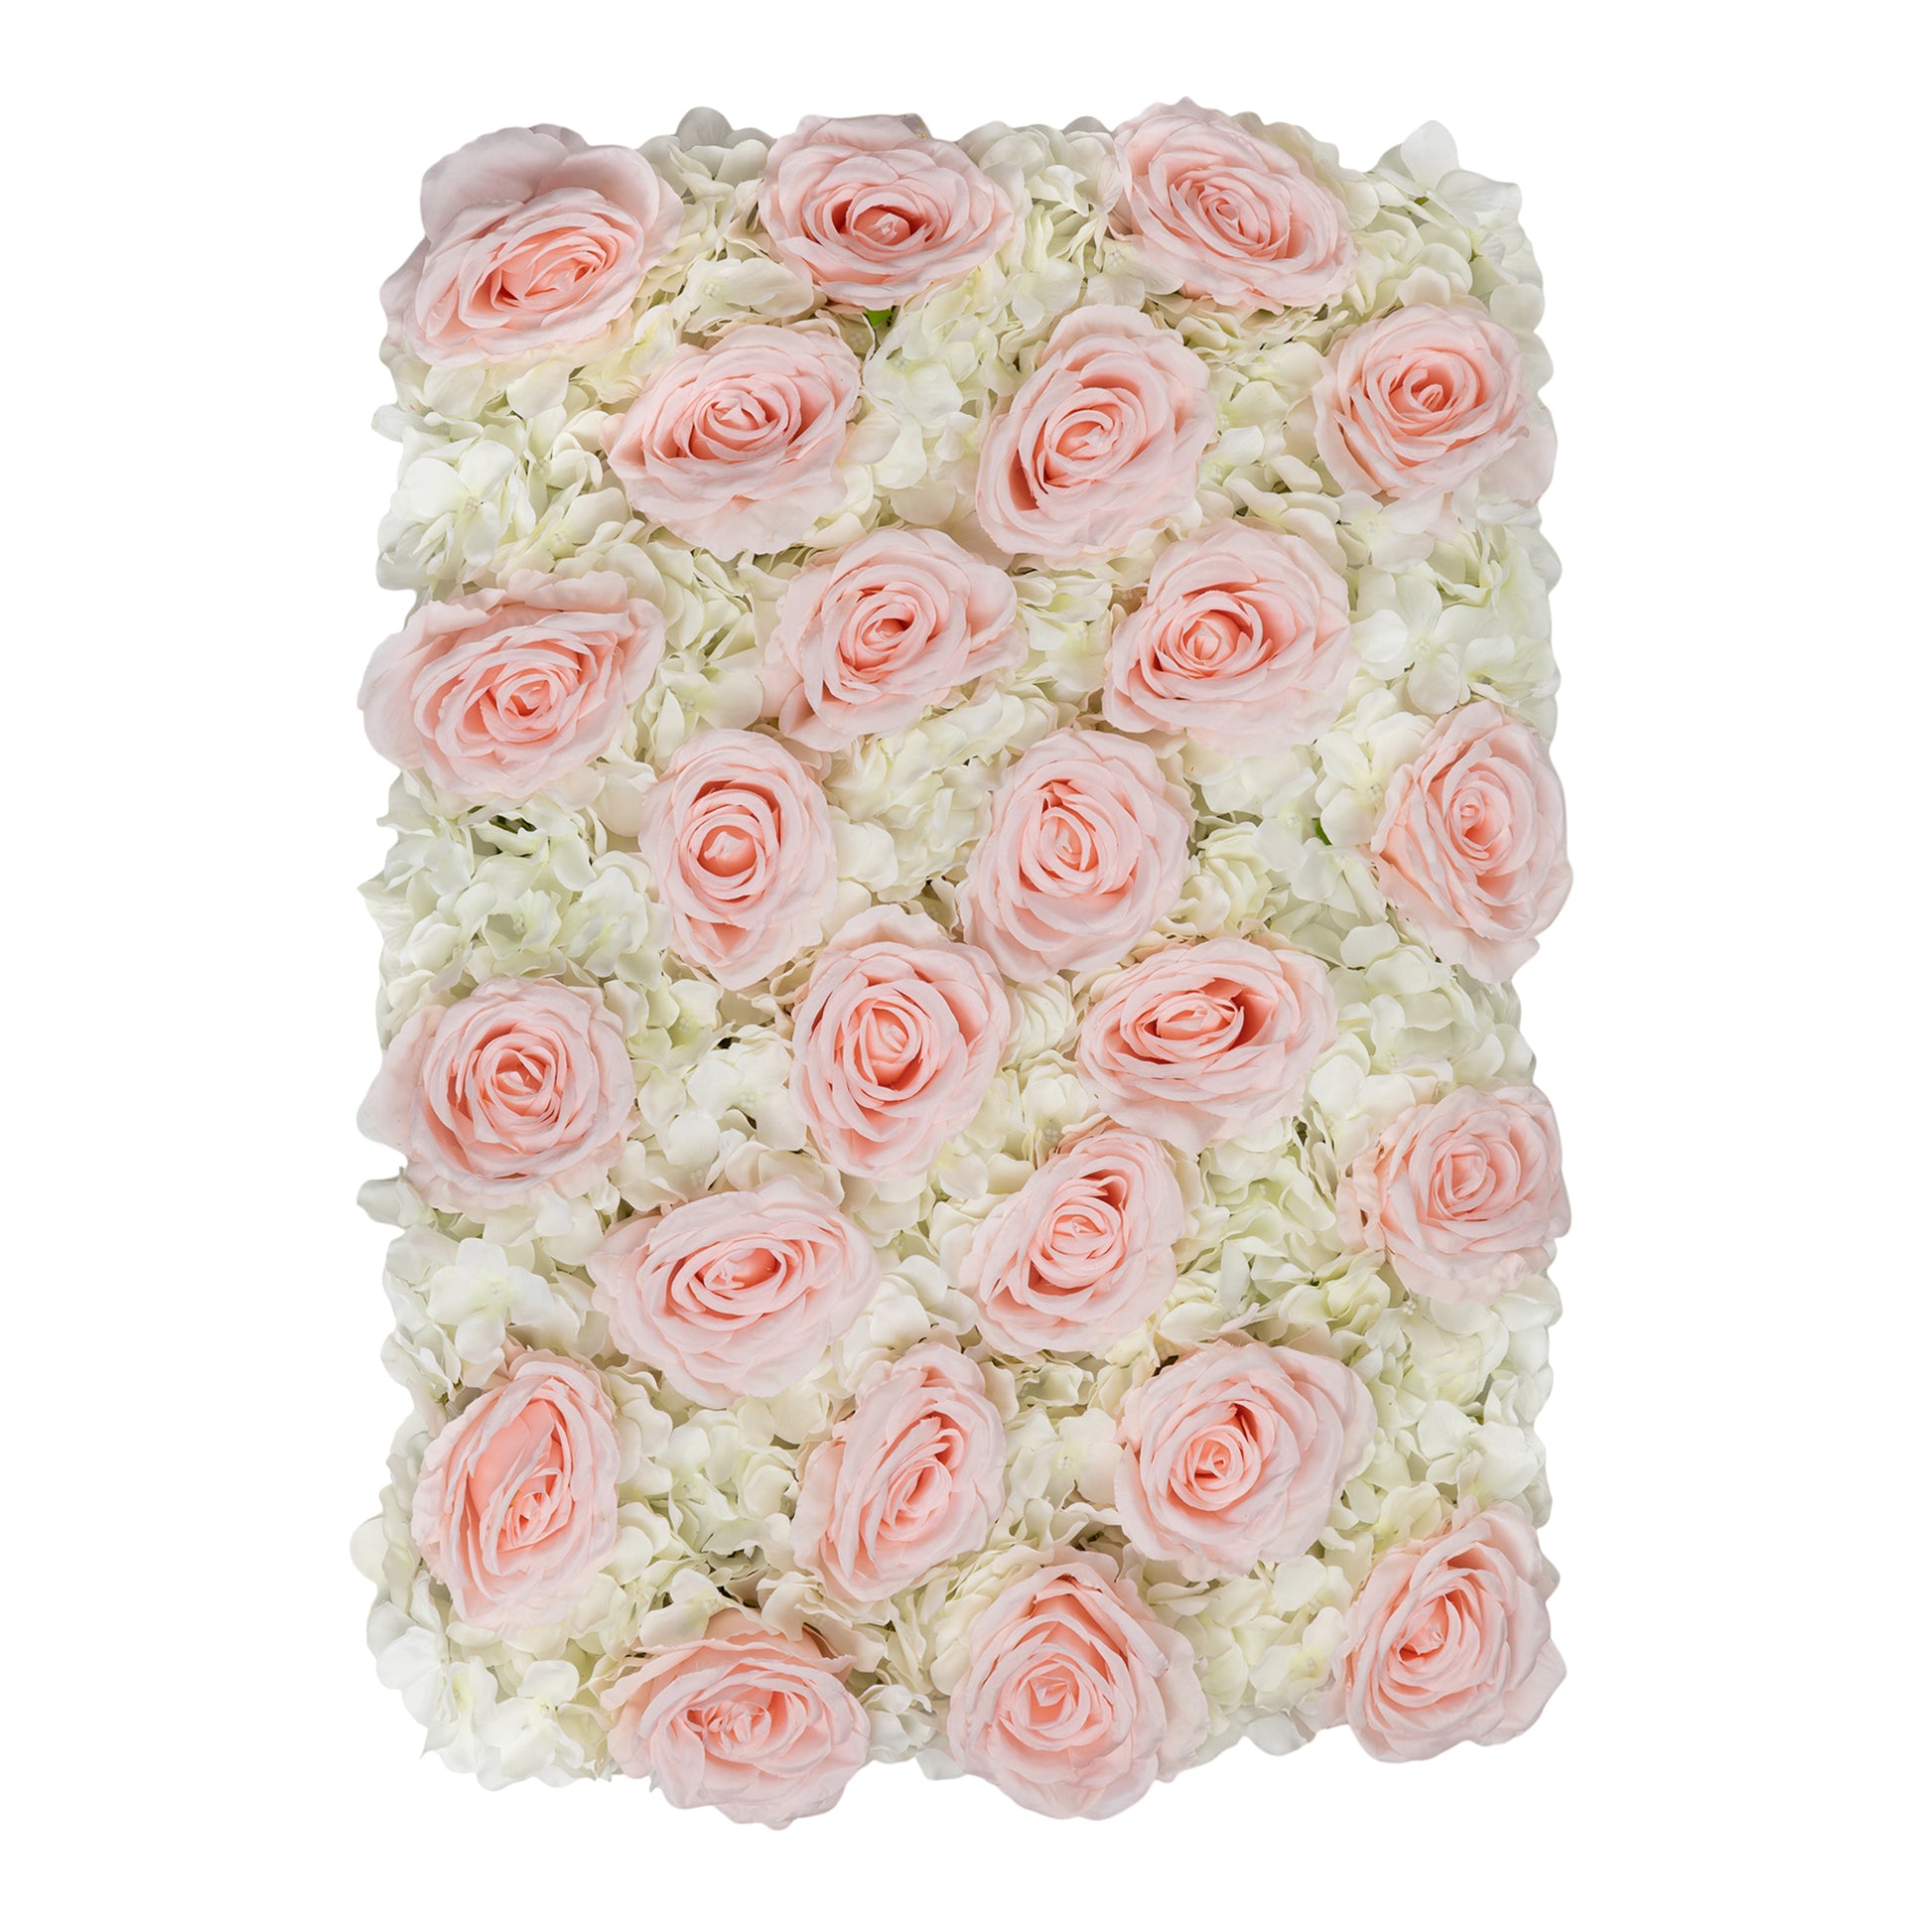 Silk Roses/Hydrangeas Flower Wall Backdrop Panel - Light Pink/White